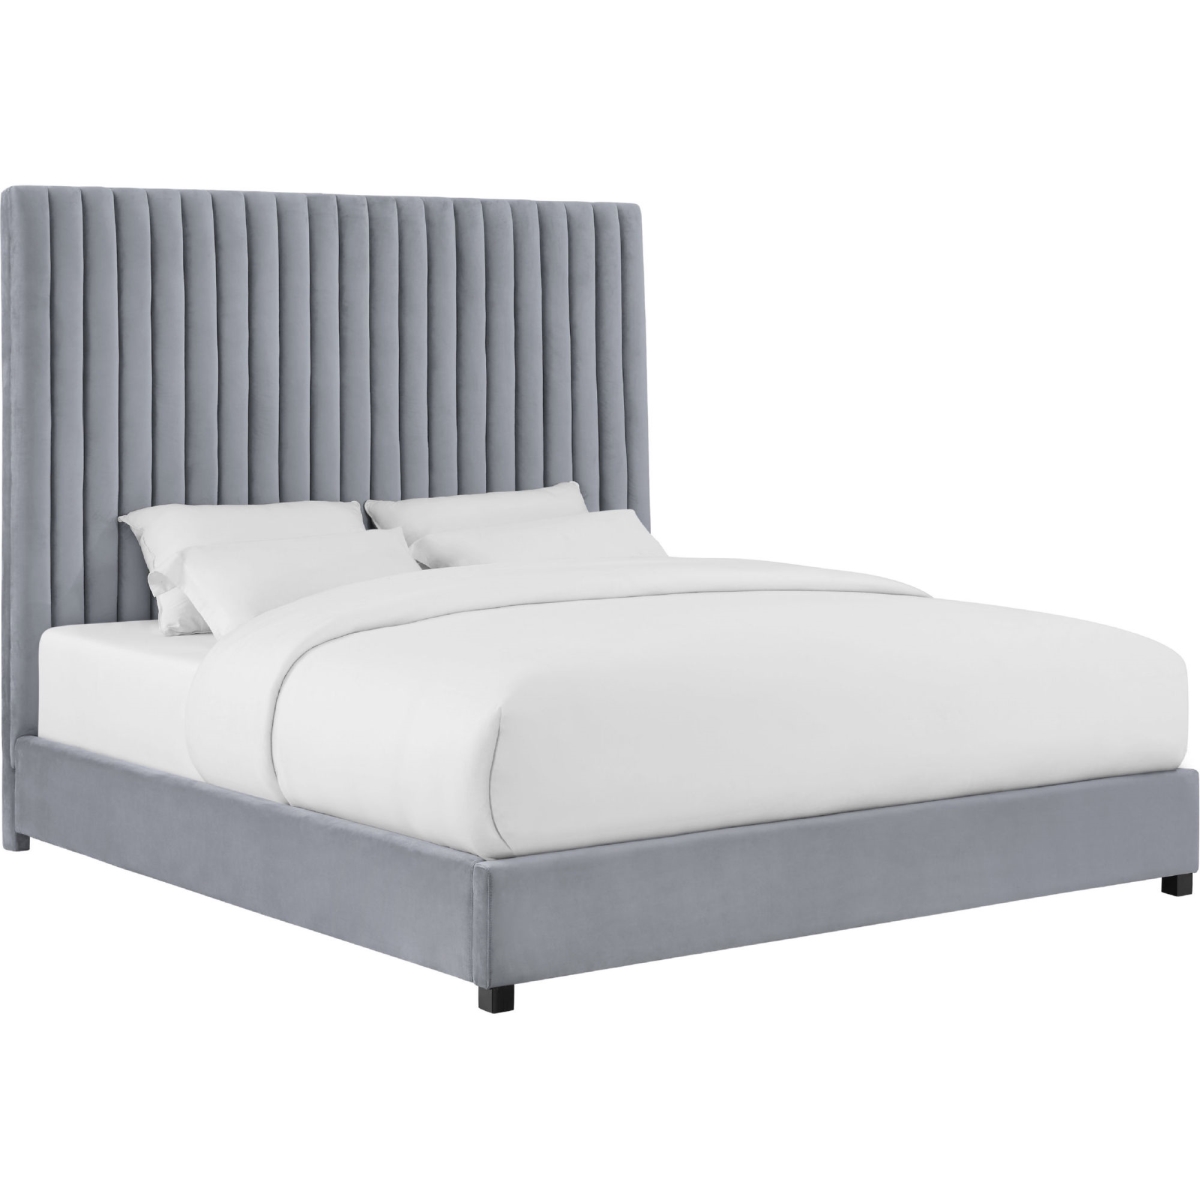 TOV-B97 67 x 65.4 x 82.3 in. Arabelle Grey Velvet Bed, Queen Size -  Tov Furniture